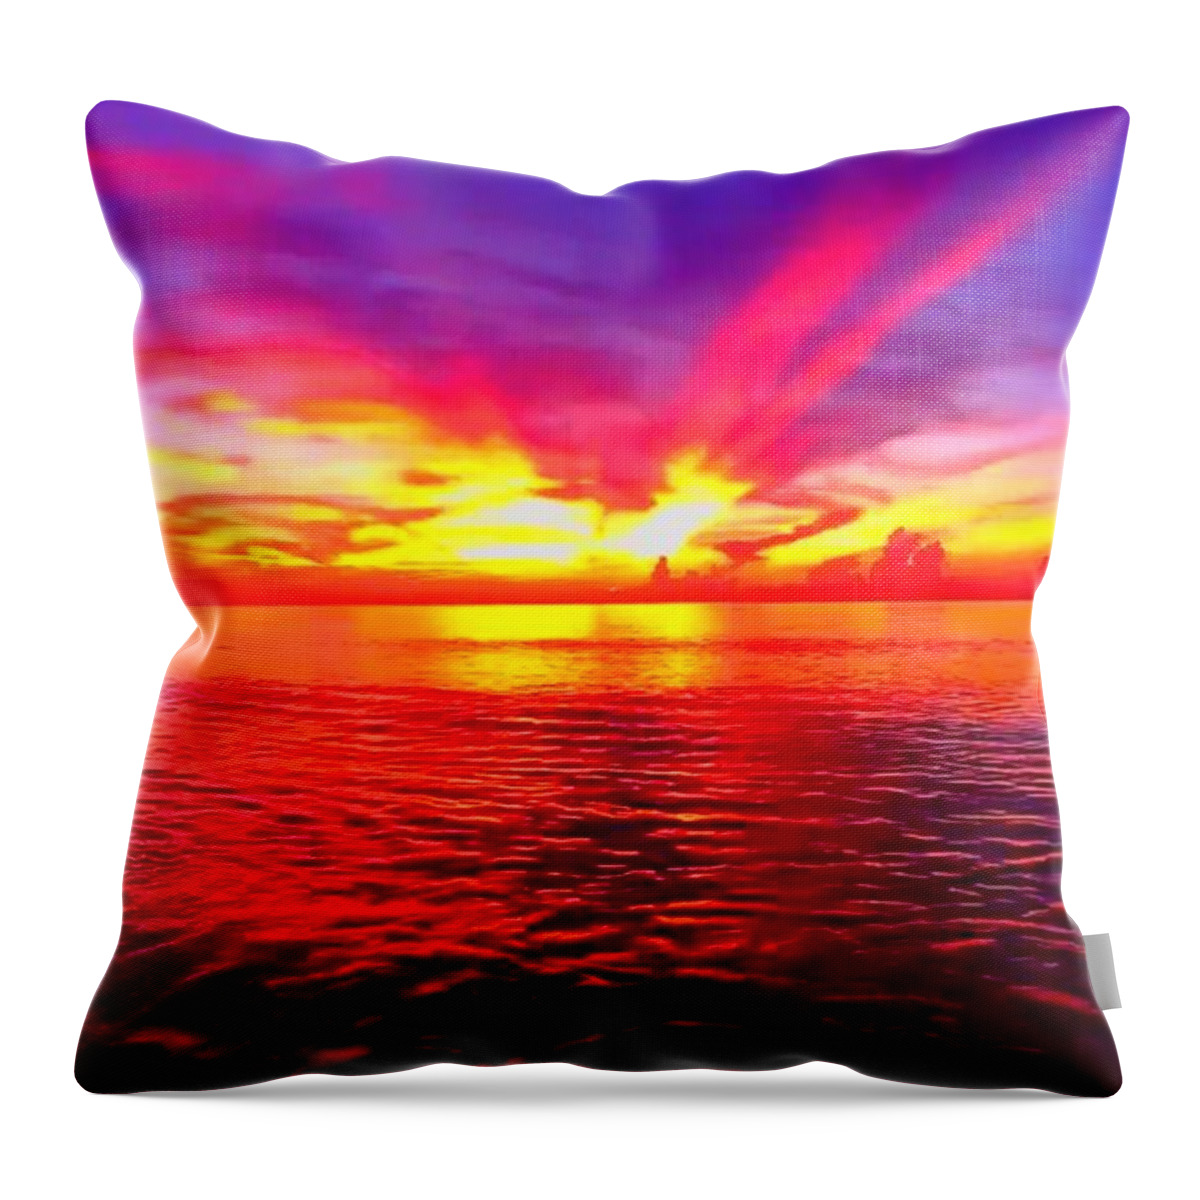 Sunrise Throw Pillow featuring the photograph Sunrise Beach 18 by Rip Read